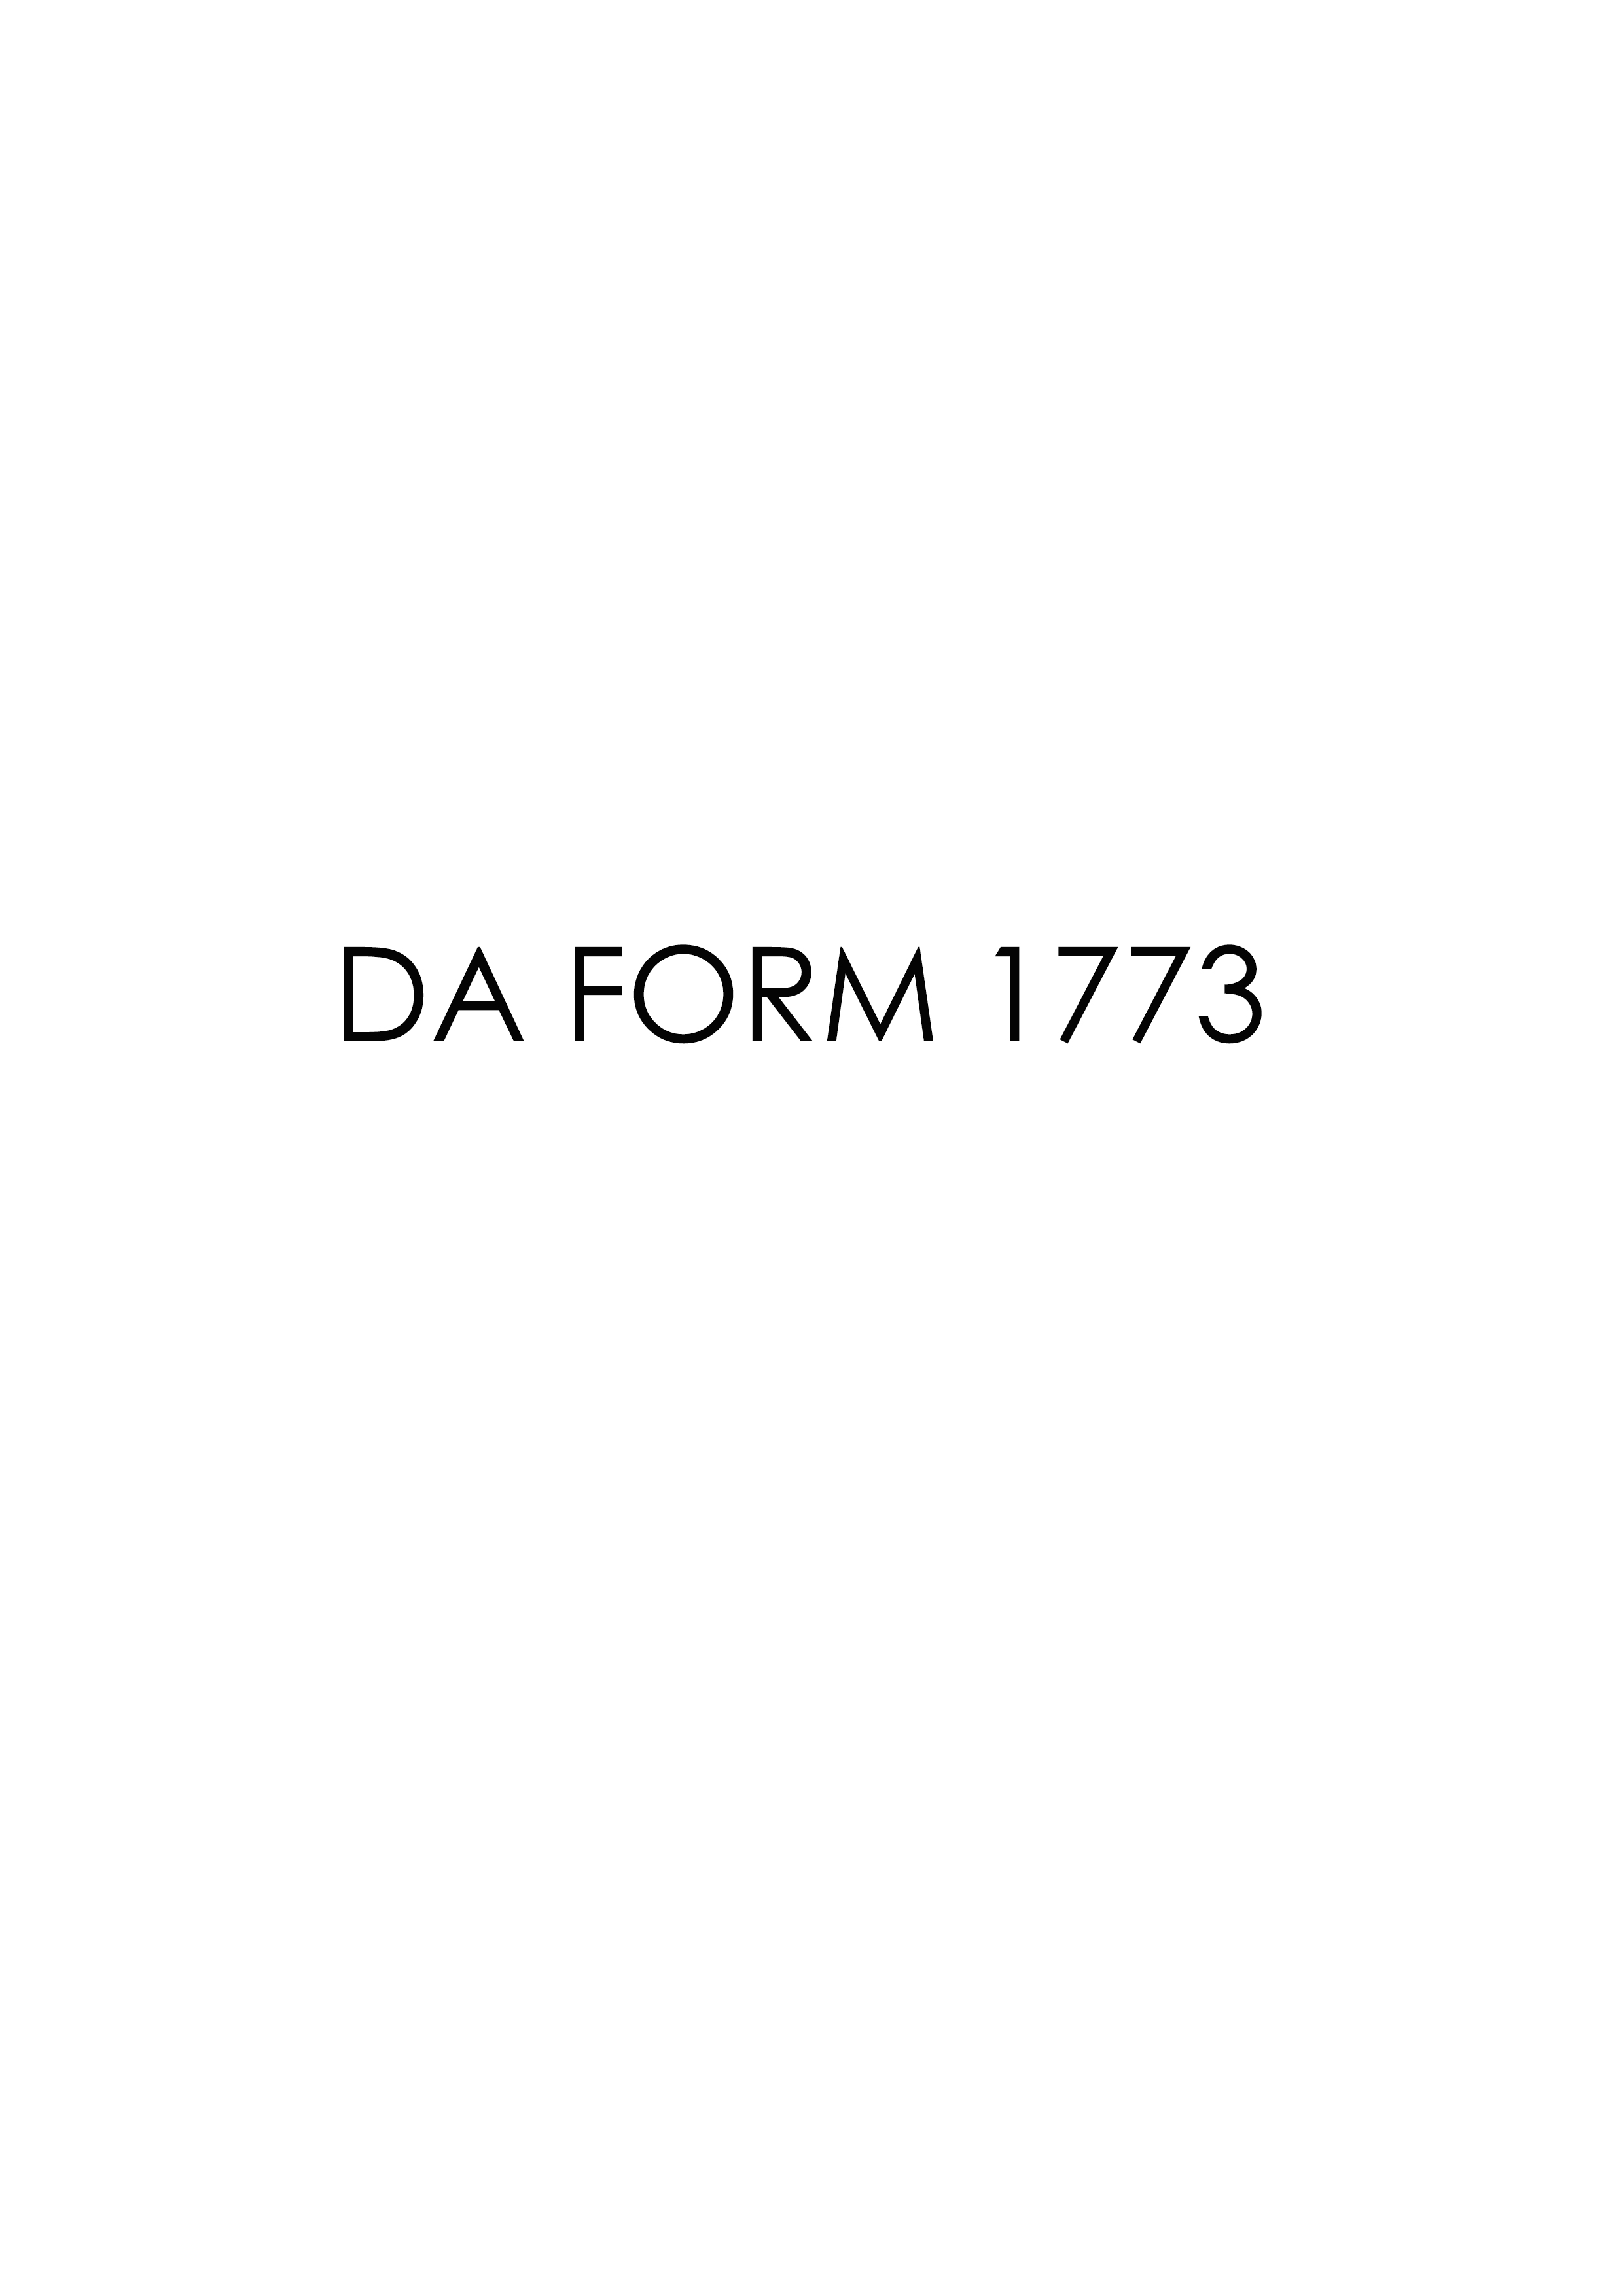 da Form 1773 fillable